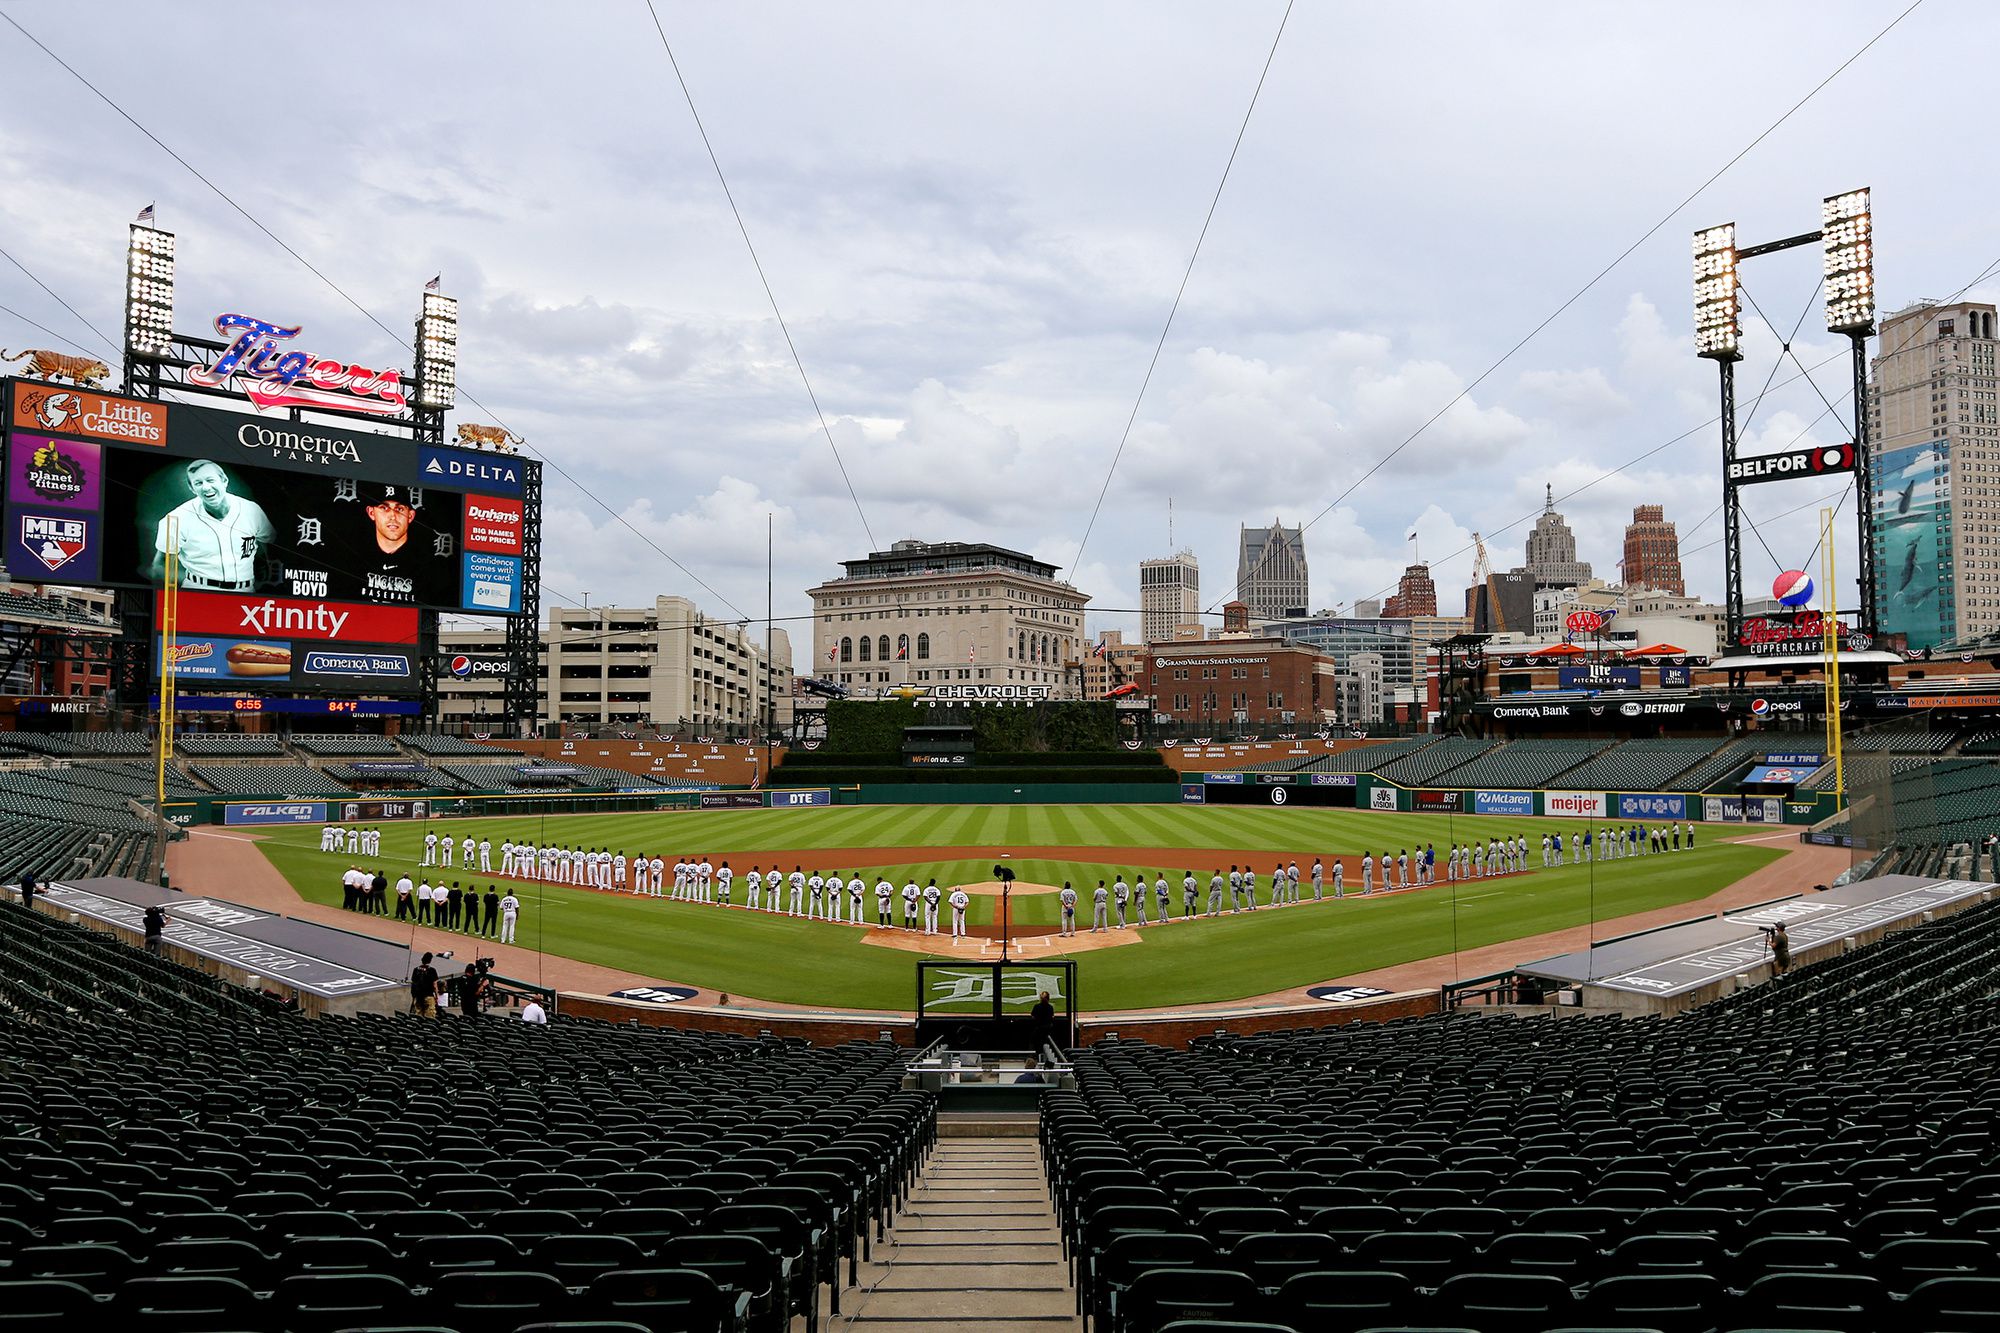 Kansas City Royals game vs. Detroit Tigers postponed. Here's when